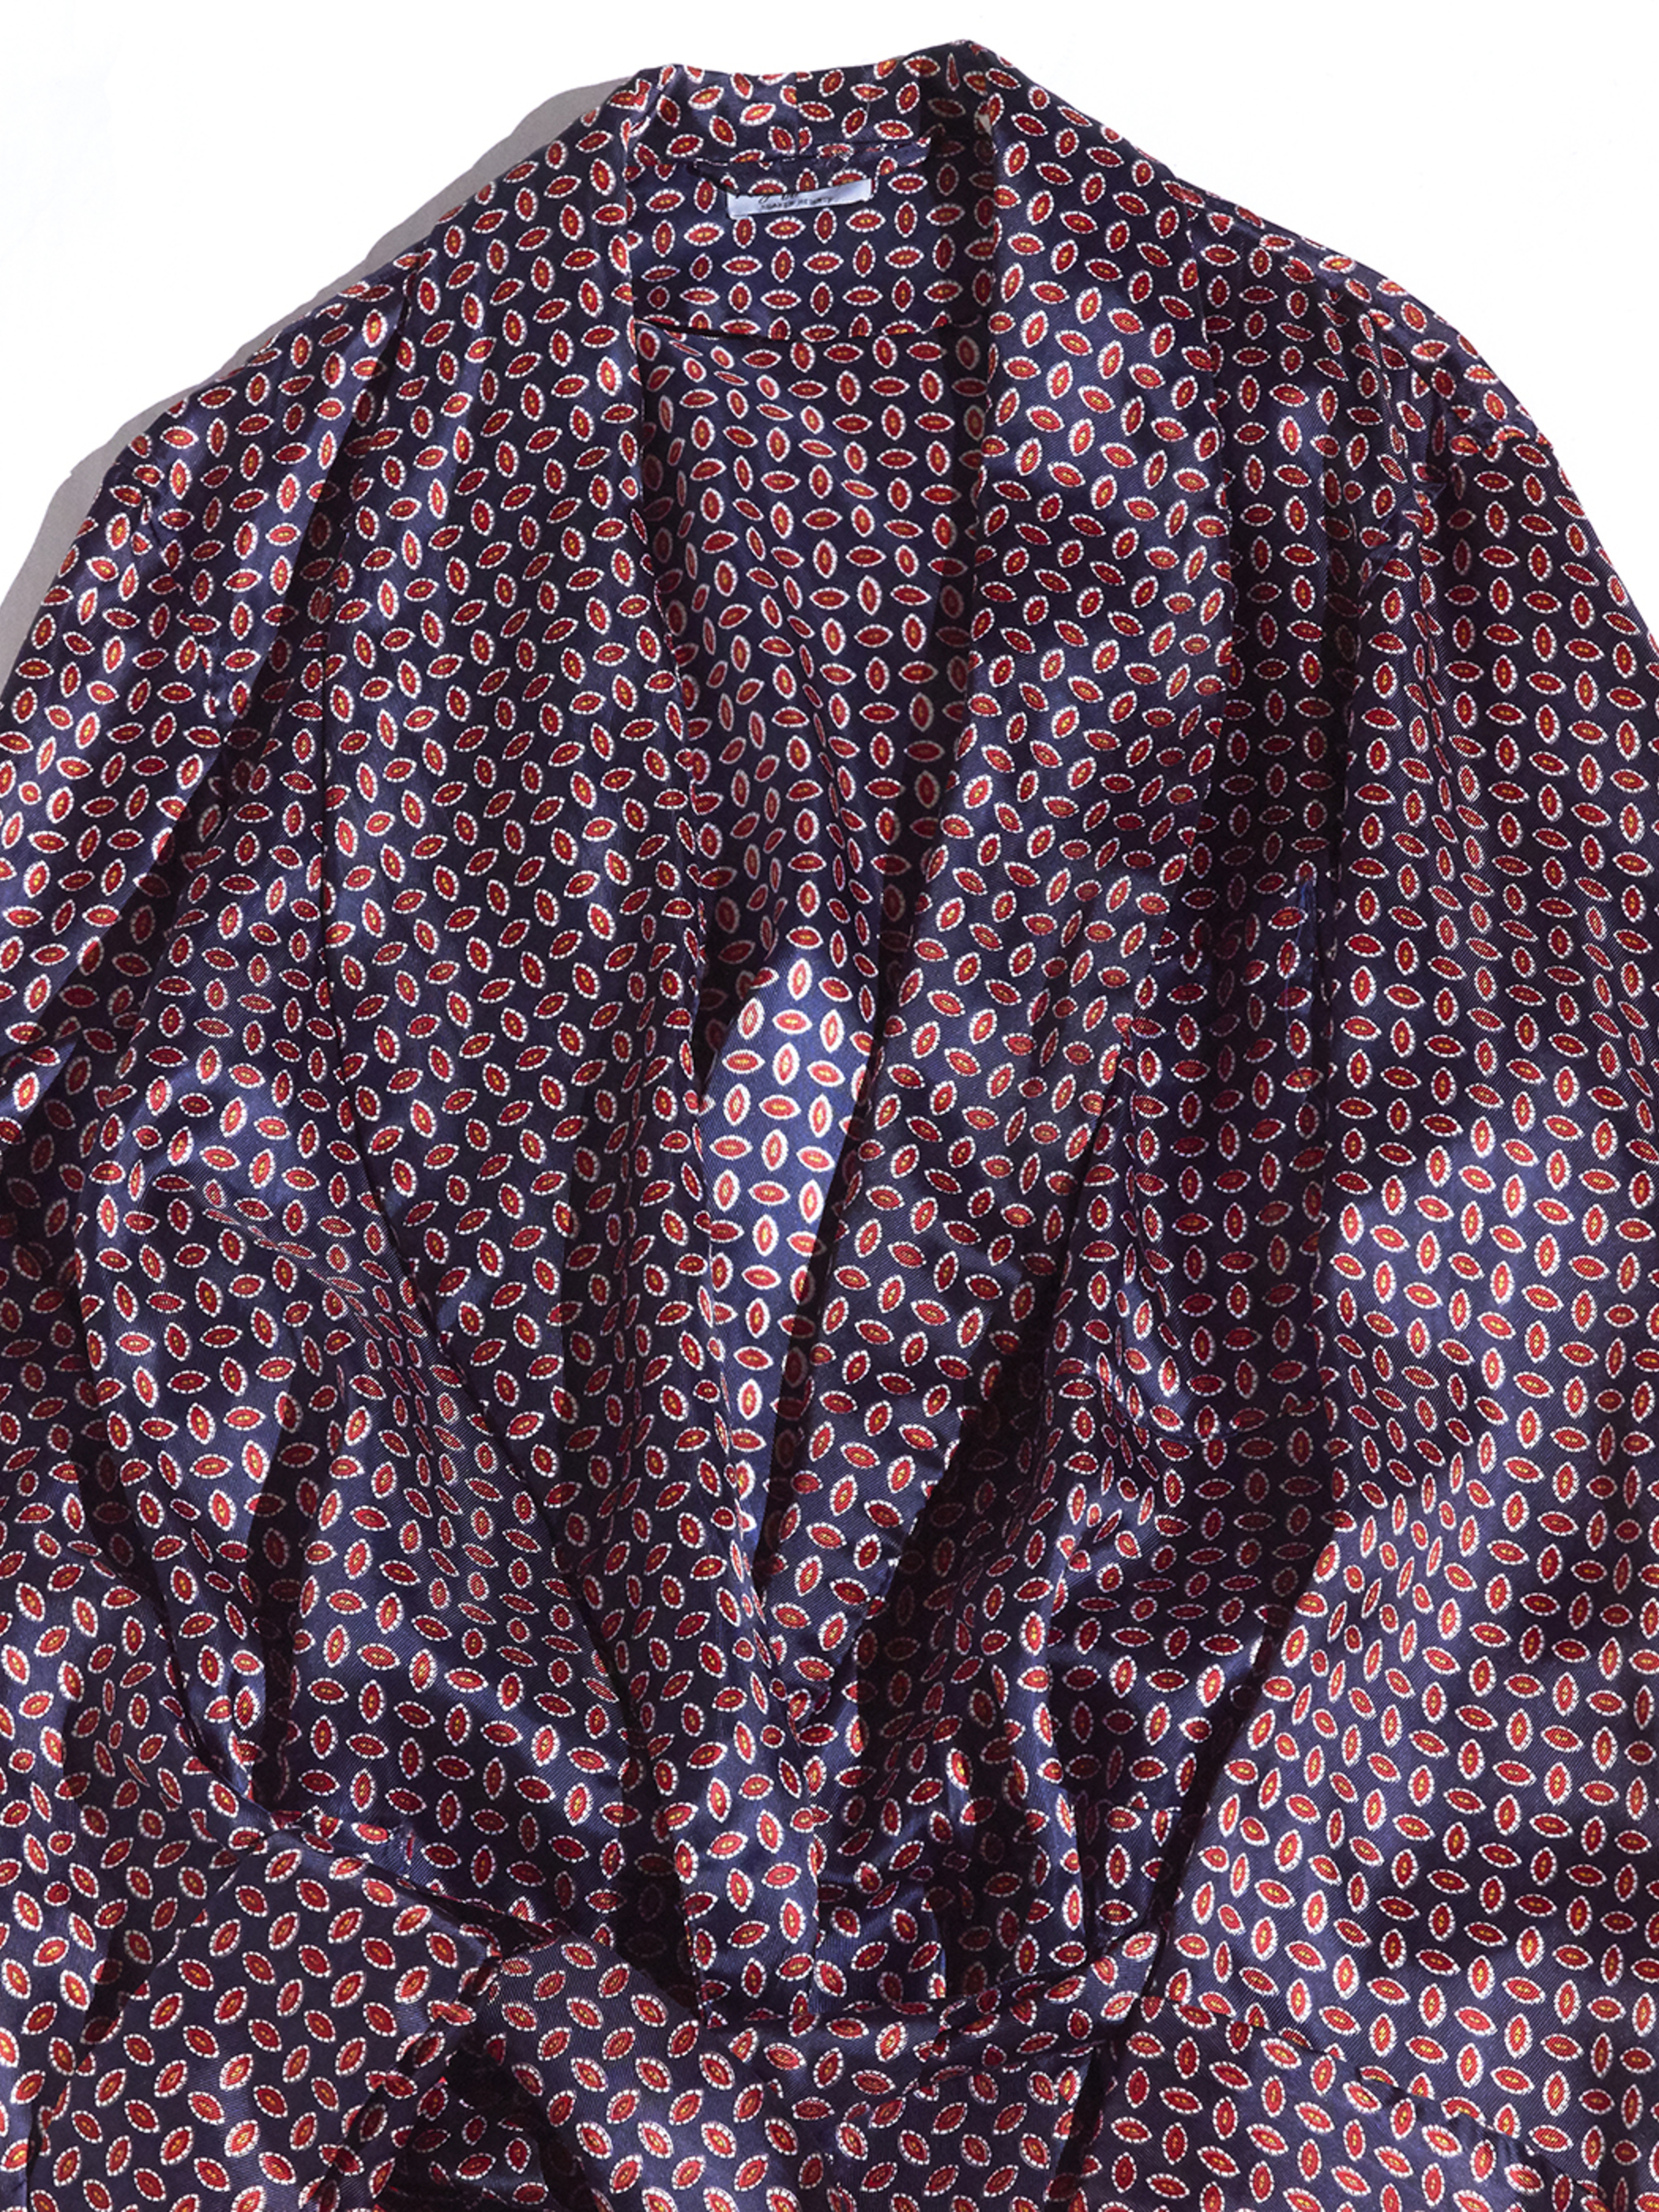 1960s "Rogoff bros" acetate pattern gown -PURPLE- <SALE¥18000→¥14400>